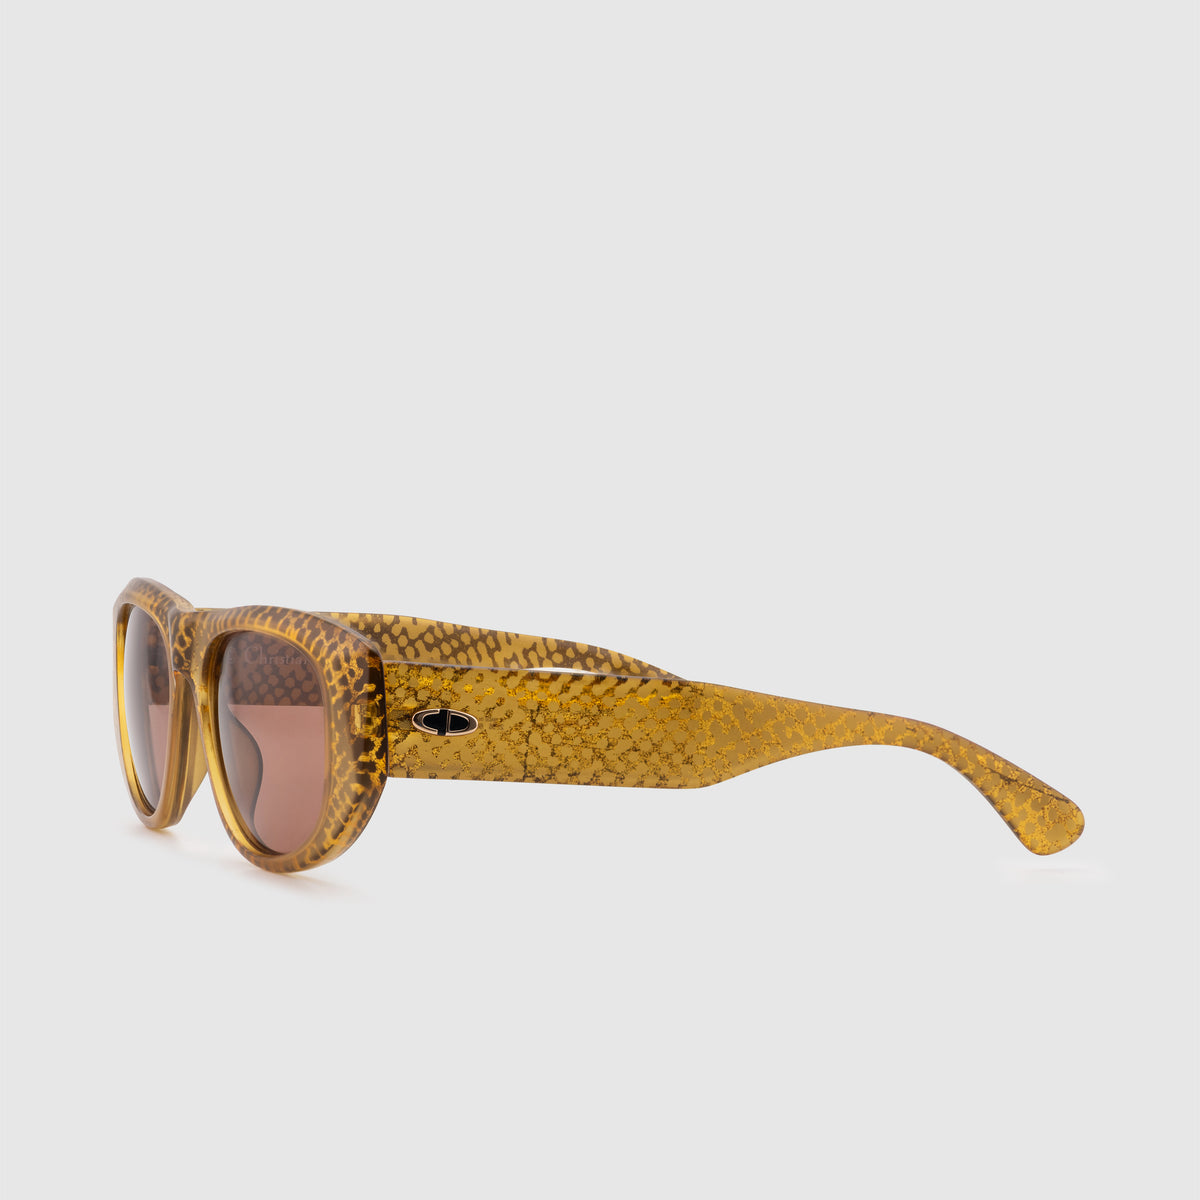 Vintage Christian Dior Sunglasses circa 1980's